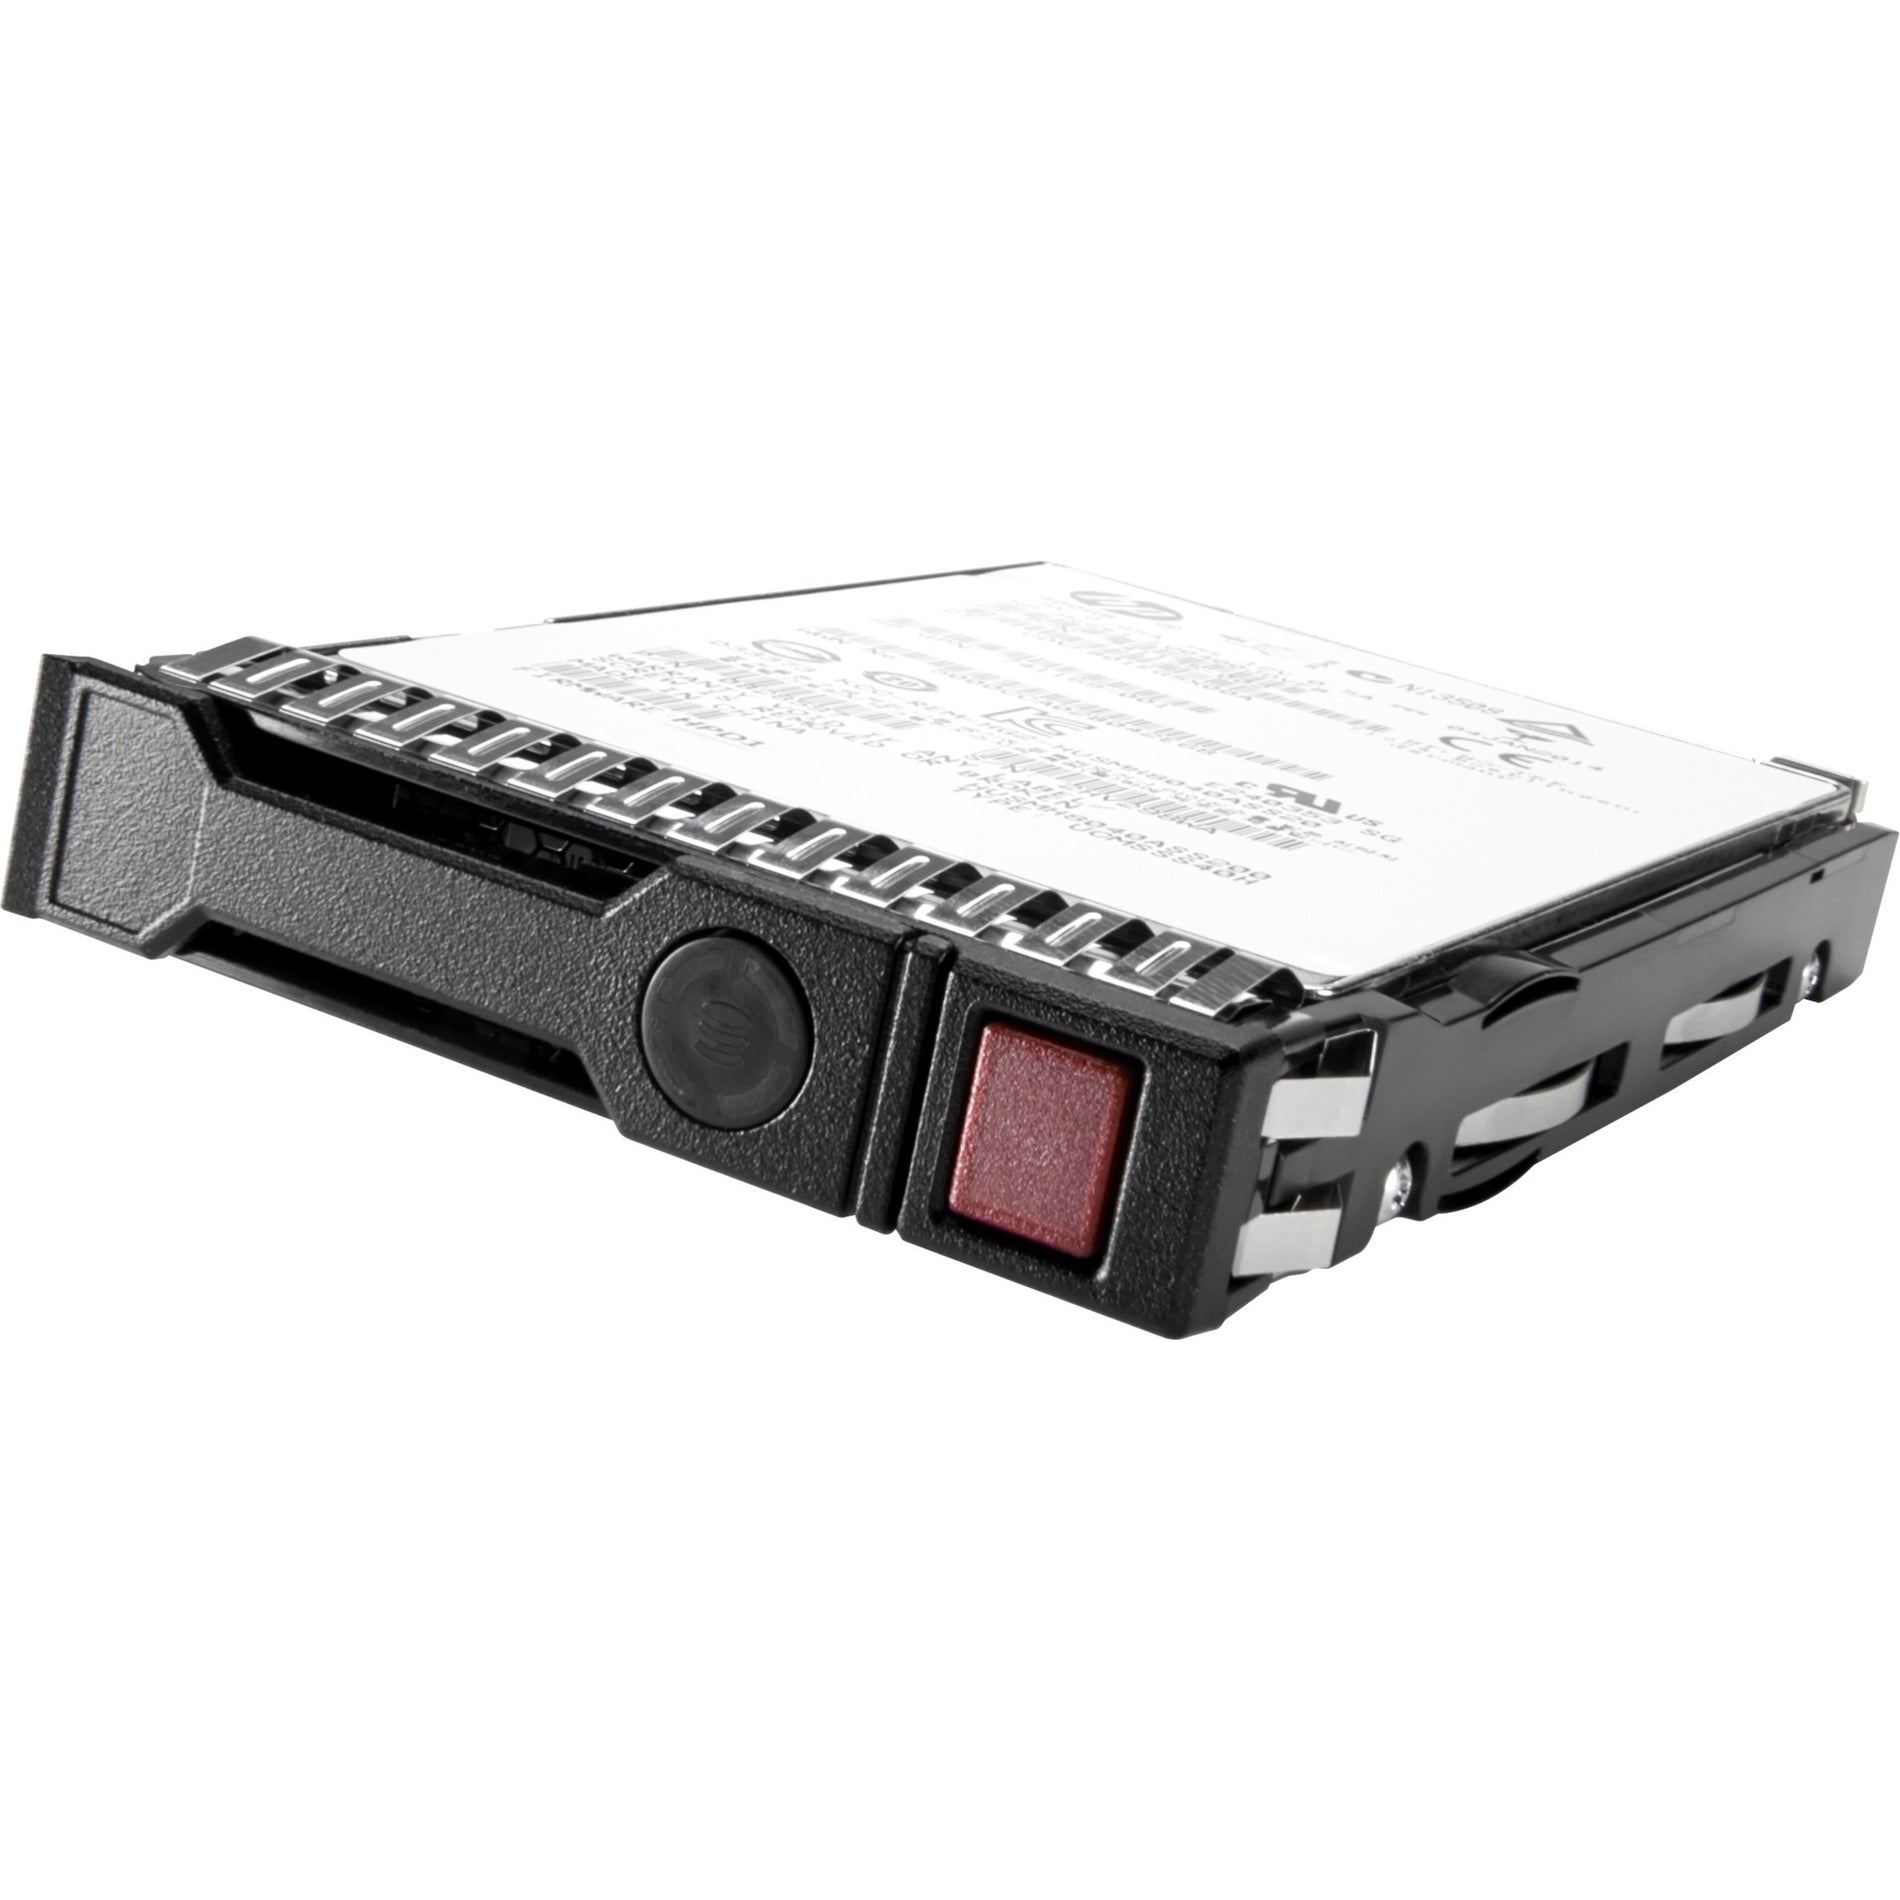 HPE E 600 GB Hard Drive - 2.5" Internal - SAS (12Gb/s SAS) (872477-B21)